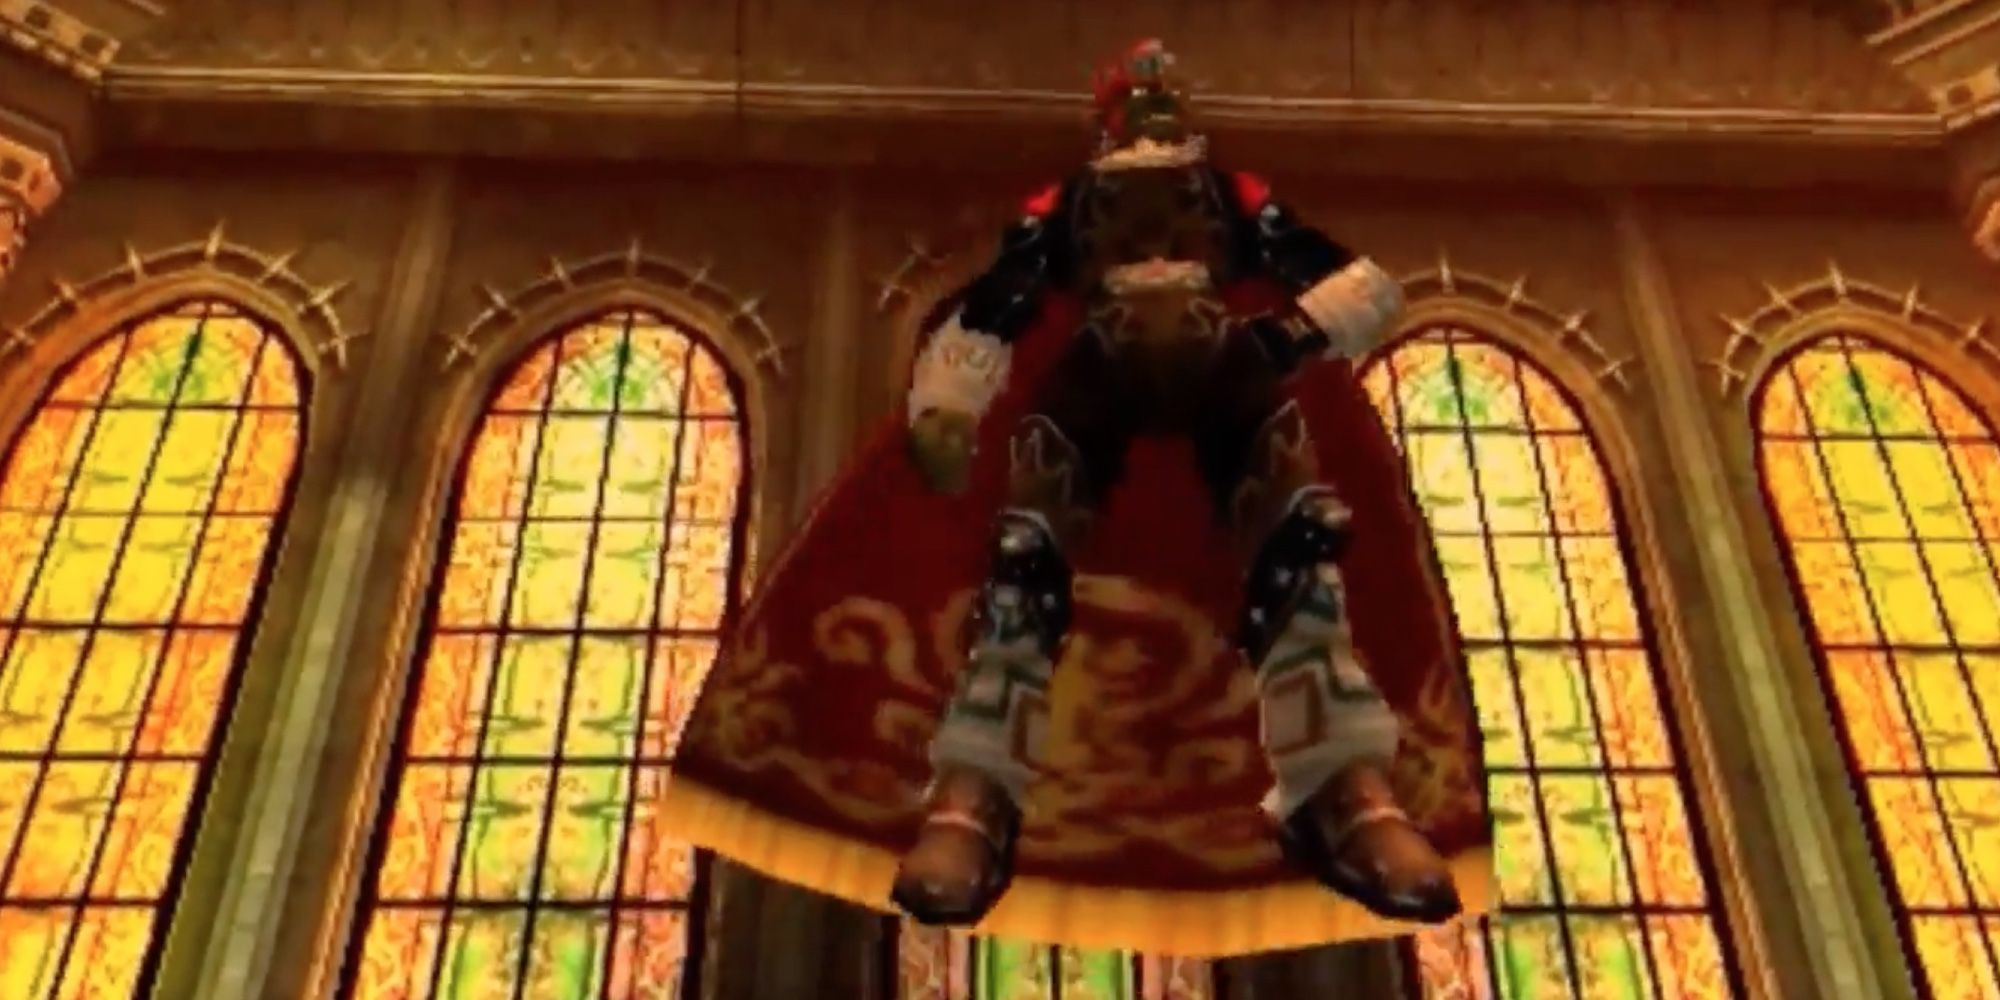 Legend of Zelda - Ocarina of Time - Ganondorf flying high